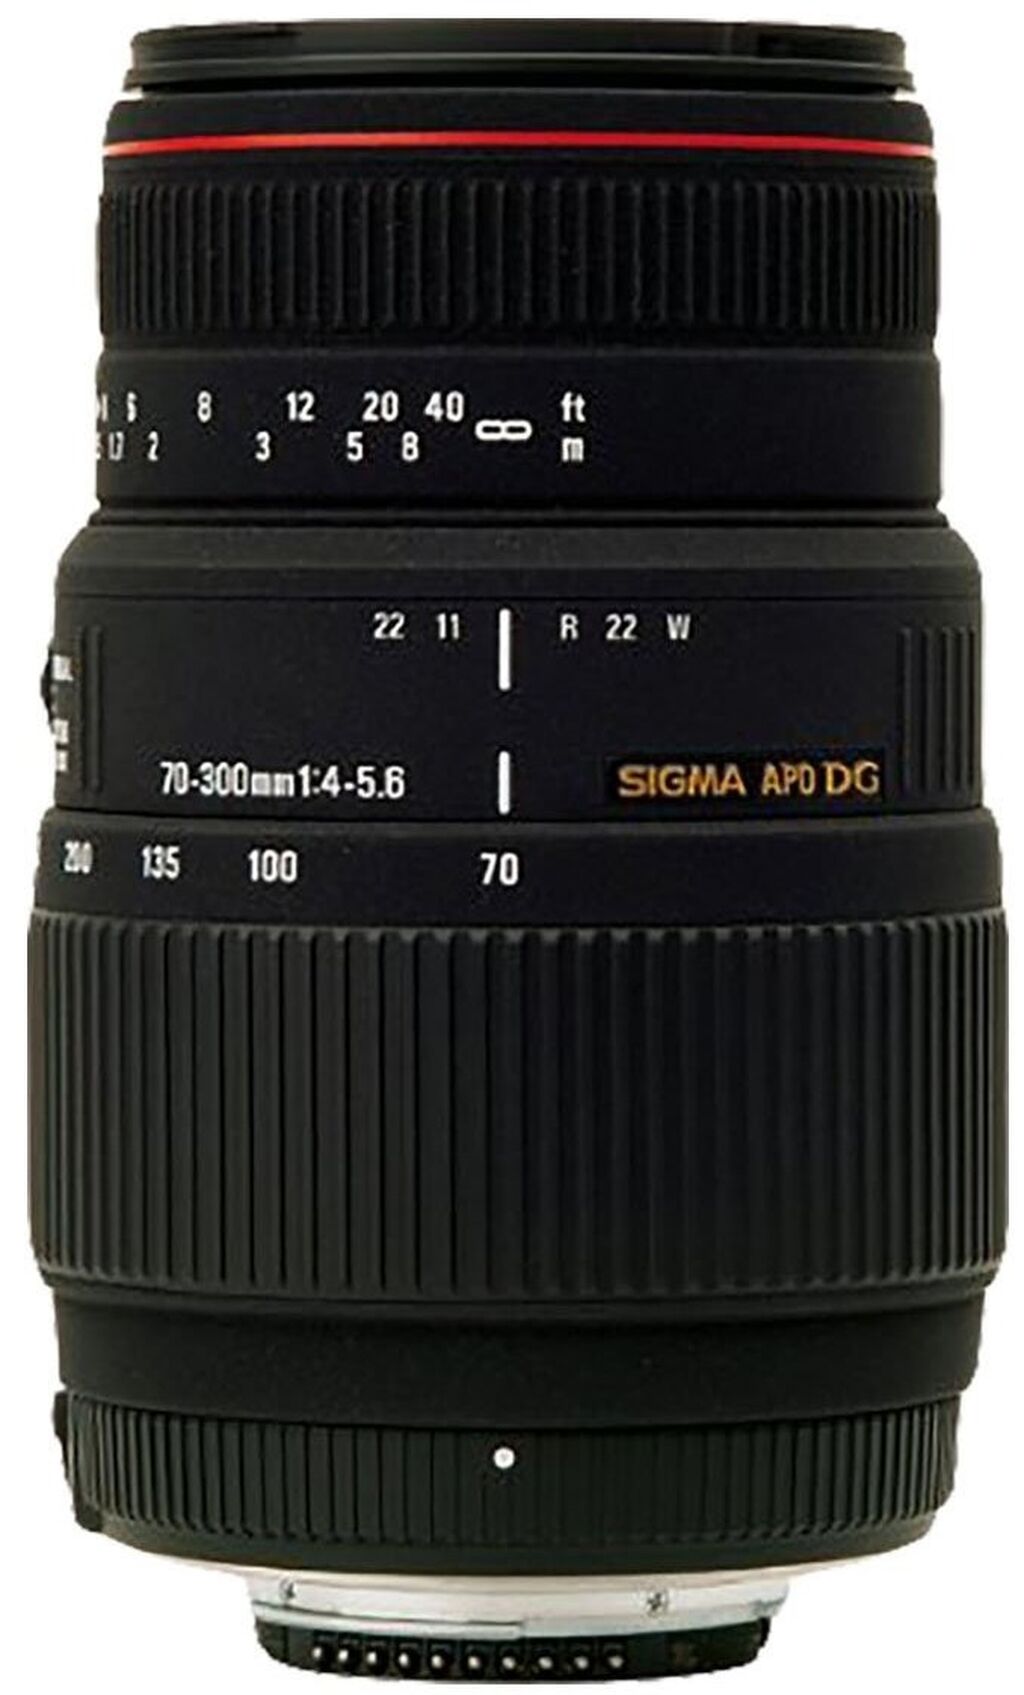 Sigma 70 300. Sigma 70-300 4-5.6 Nikon. Sigma 70-300mm d 1:4-5.6 apo DG. Sigma af 70-300mm f/4-5.6 apo macro DG Nikon f. 70-300 DG macro 4-5.6 apo Sigma.